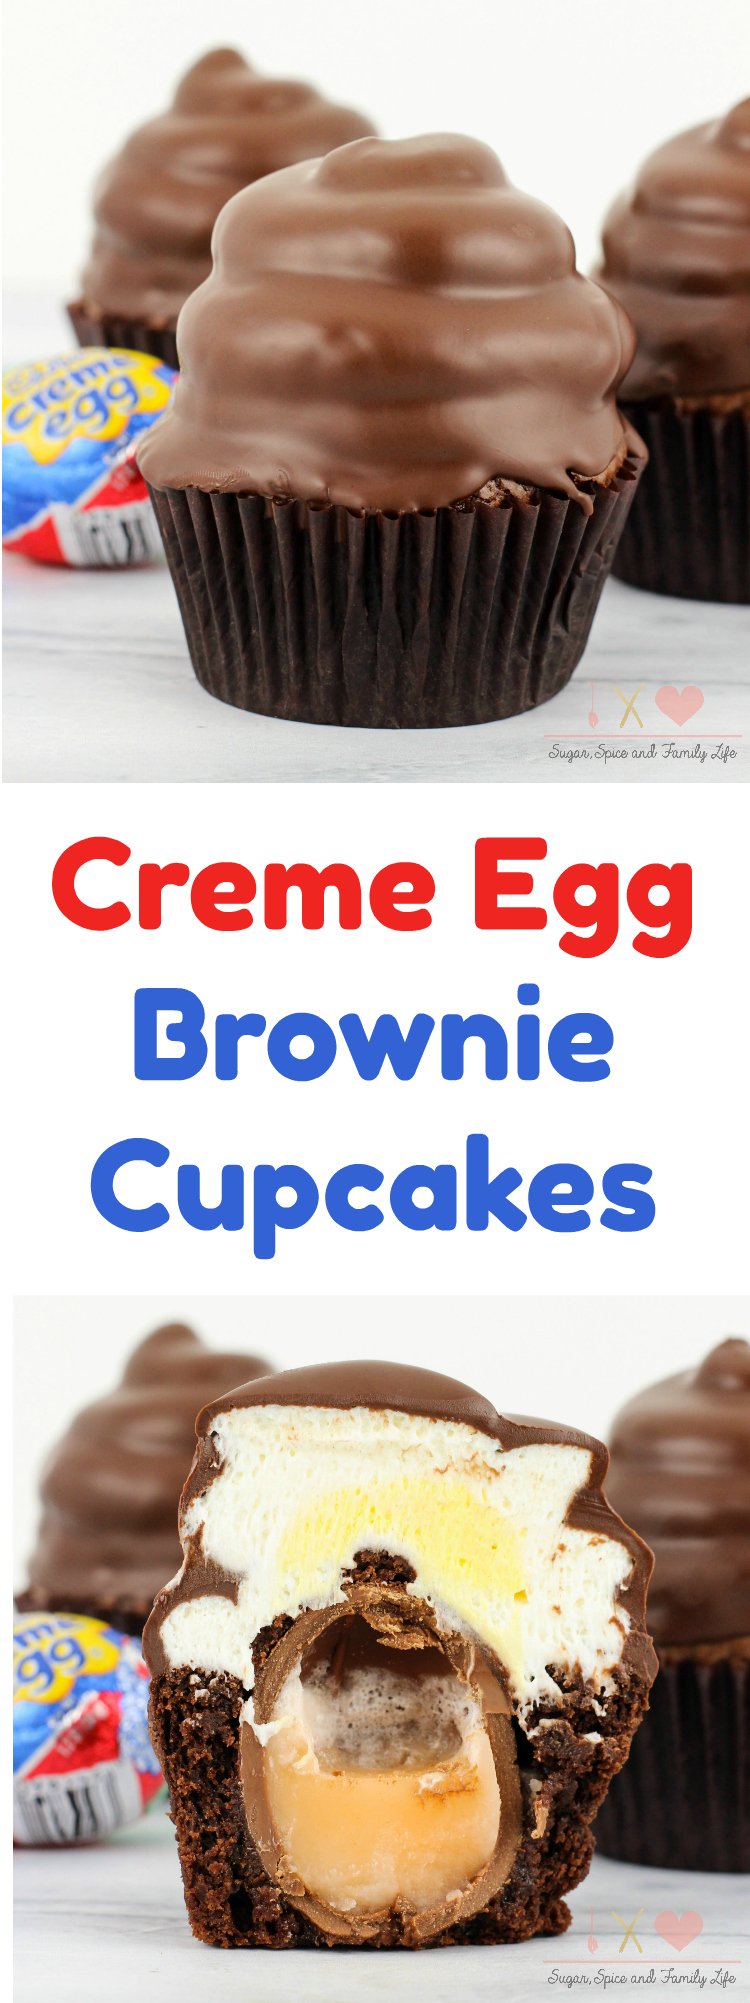 Creme Egg Brownie Cupcakes